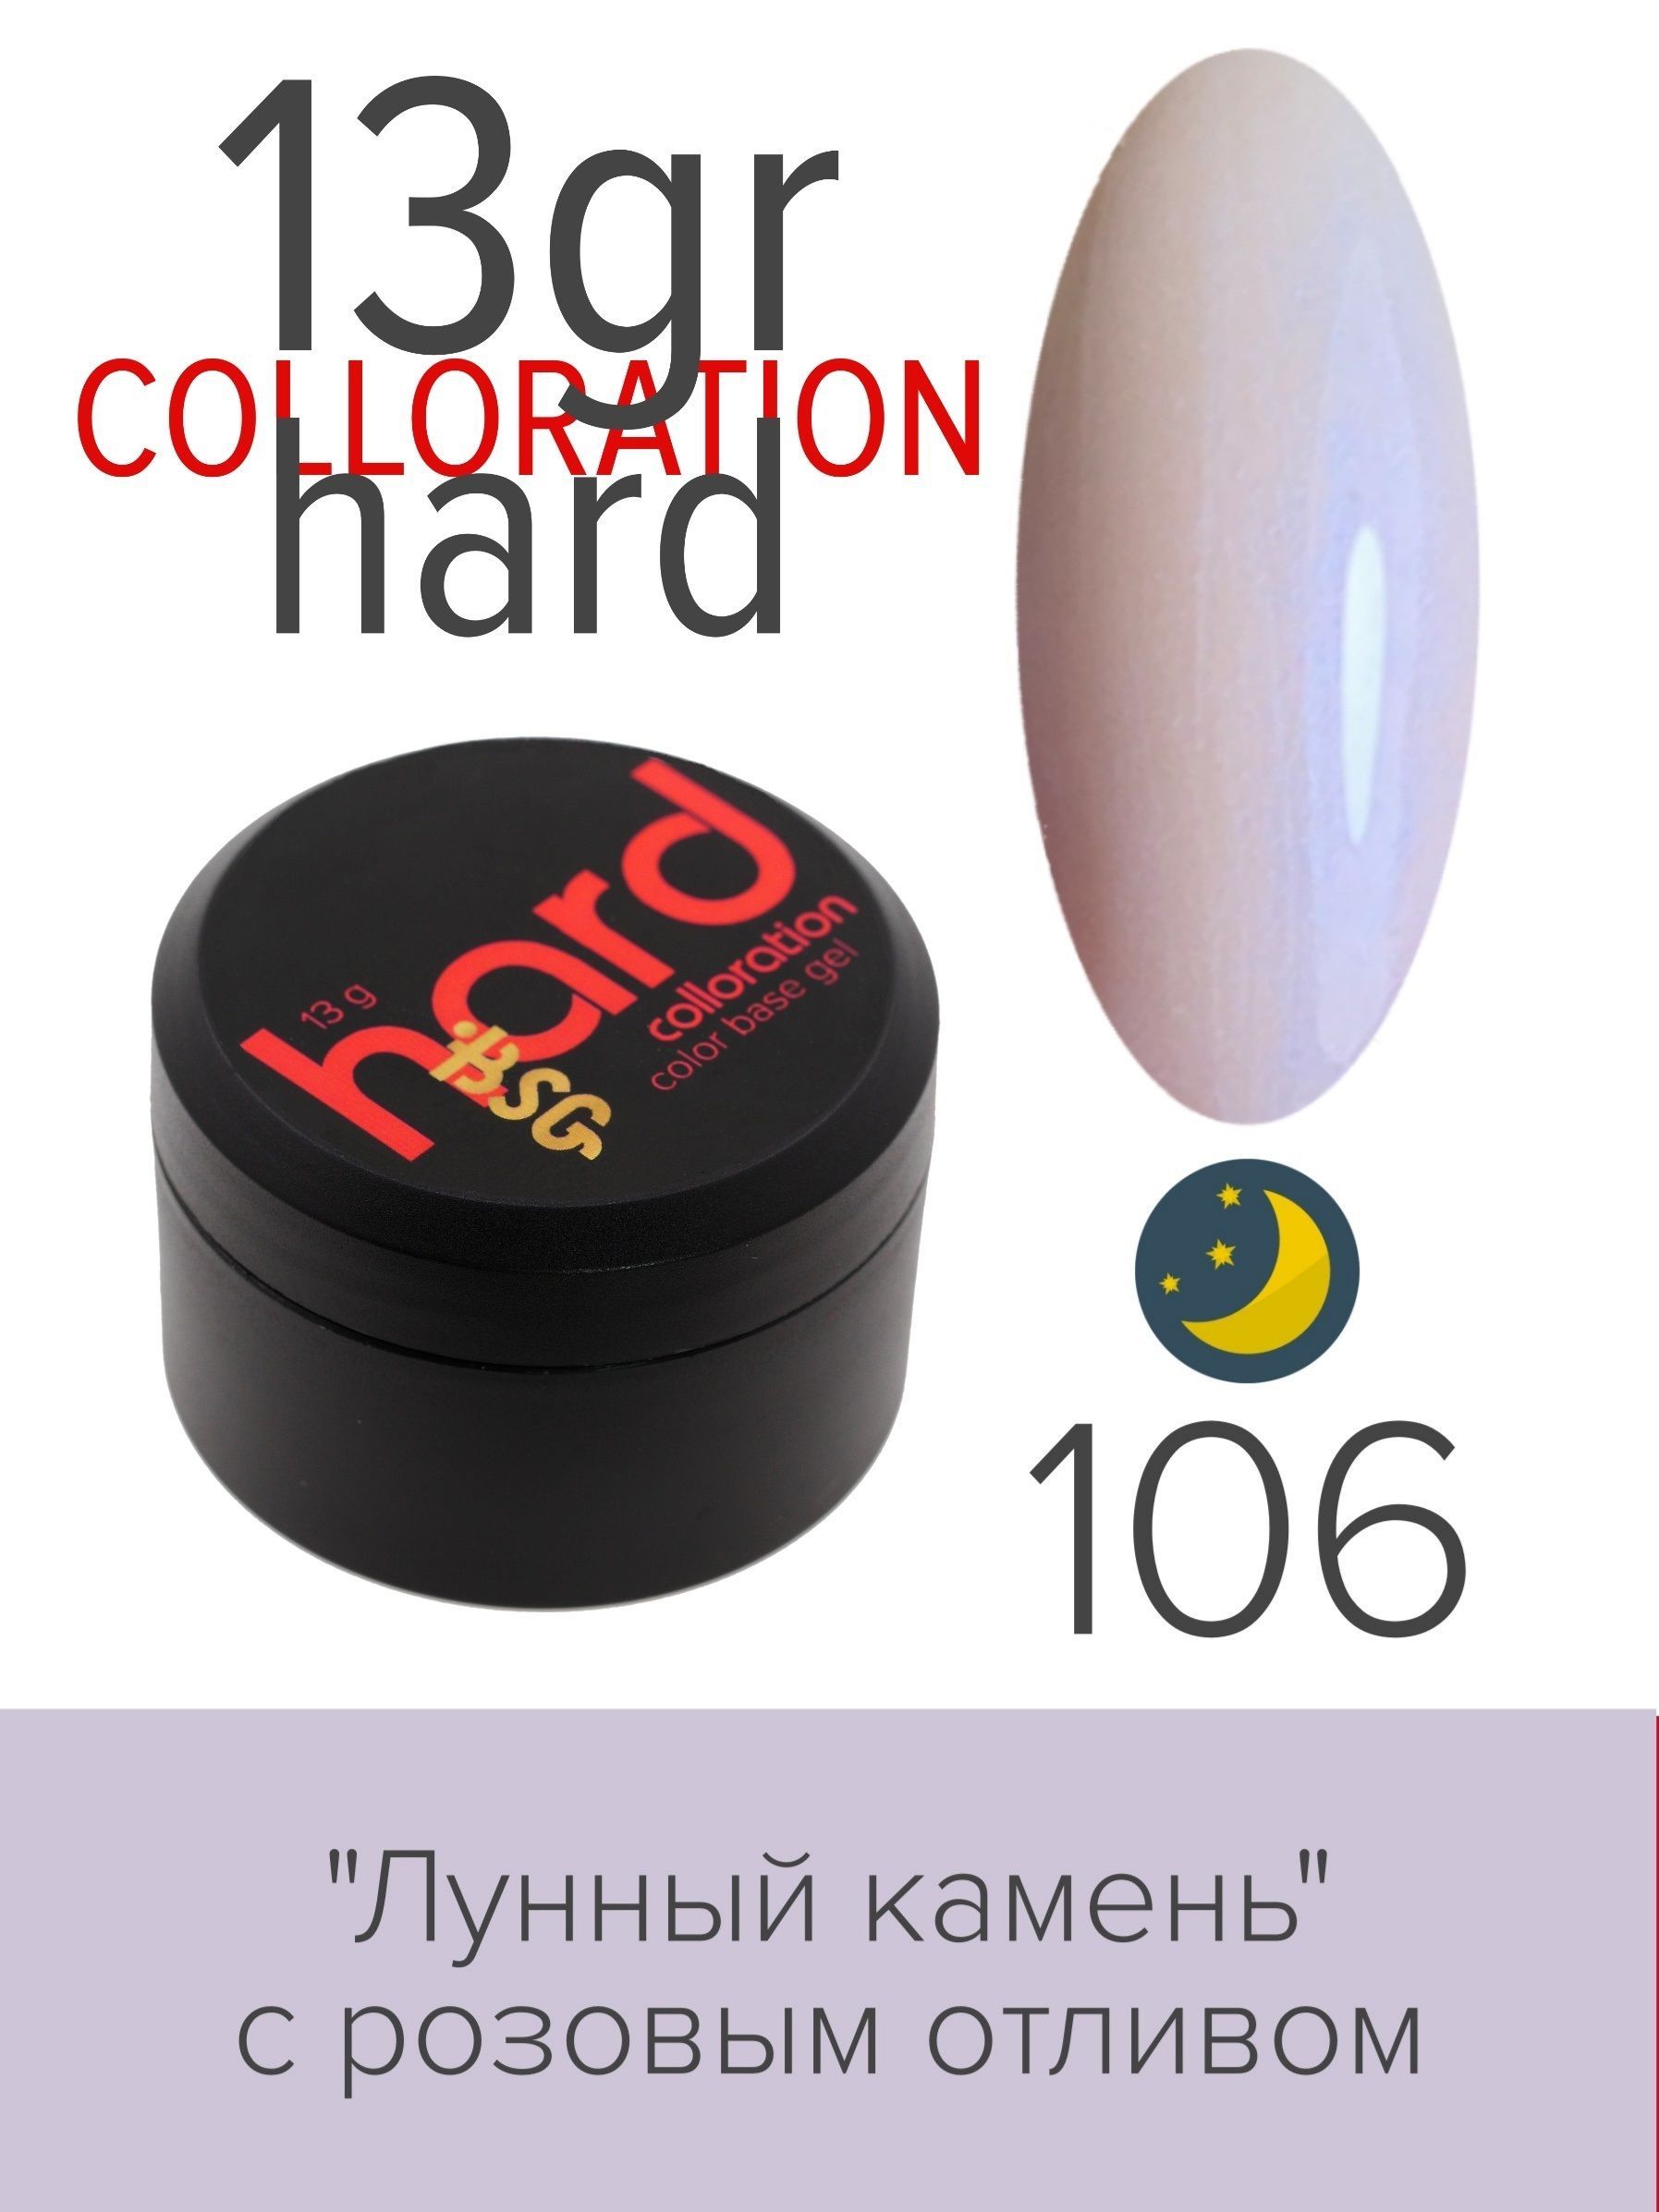 База BSG Colloration Hard цветная жесткая №106 лунный камень у коллинз